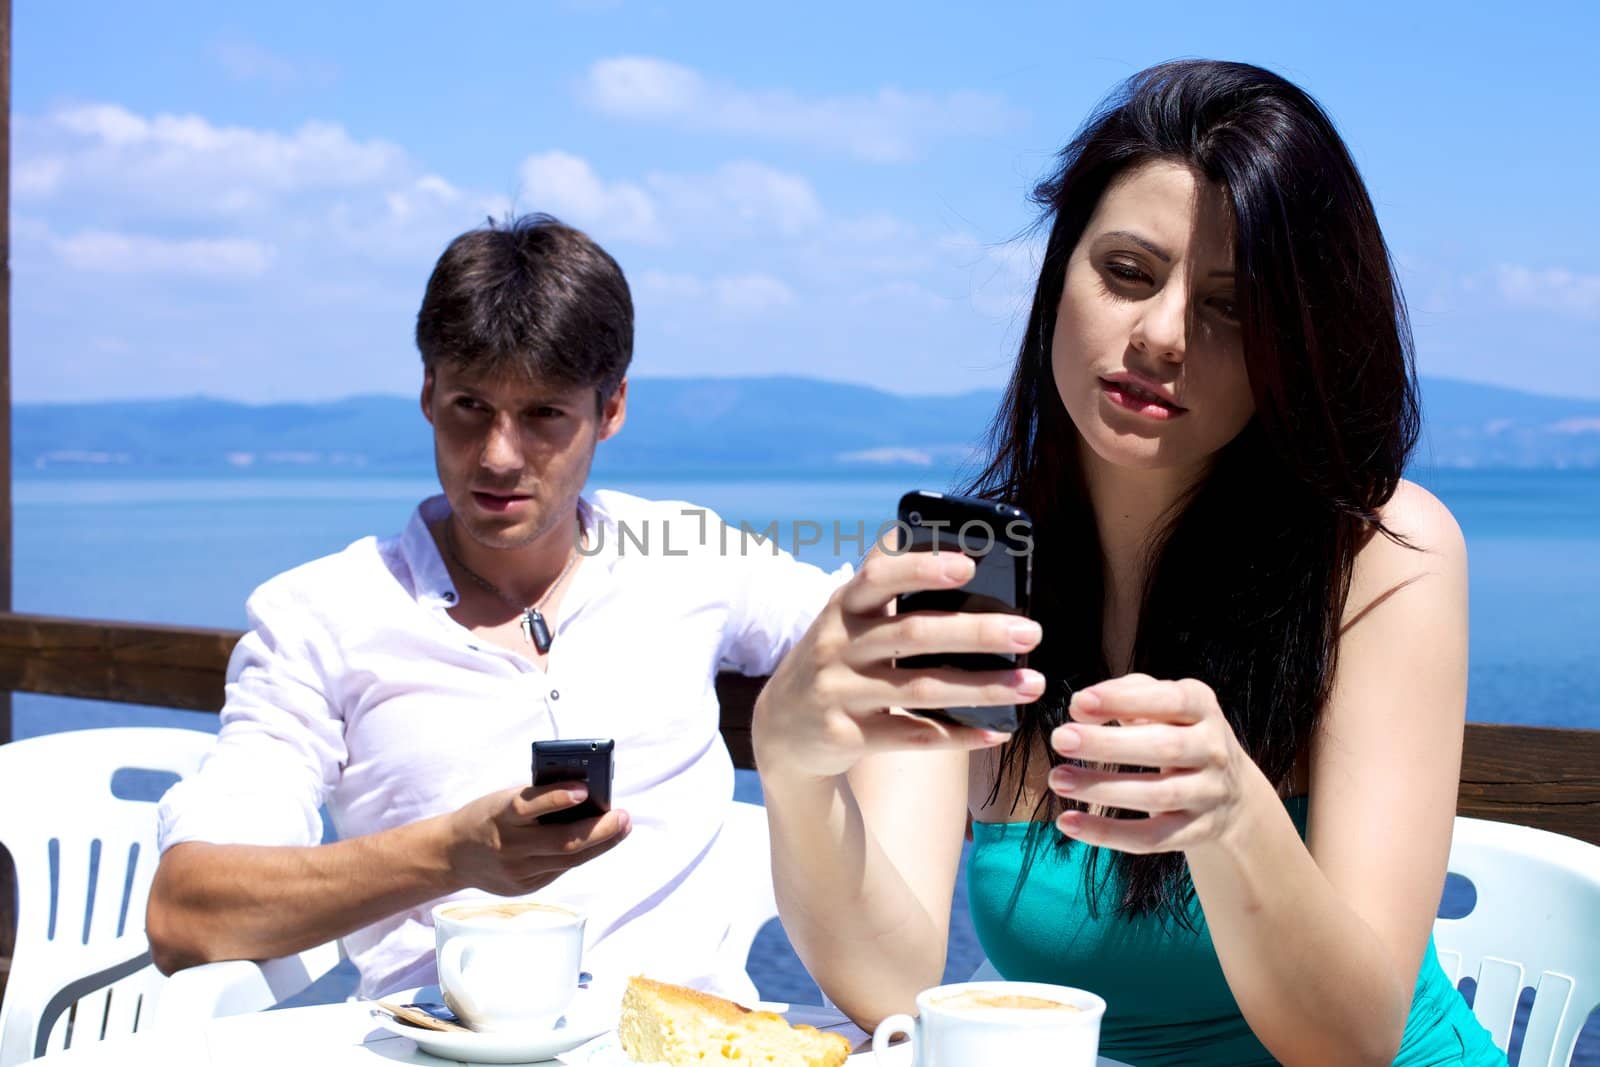 Boyfriend and girlfriend texting during breakfast by fmarsicano